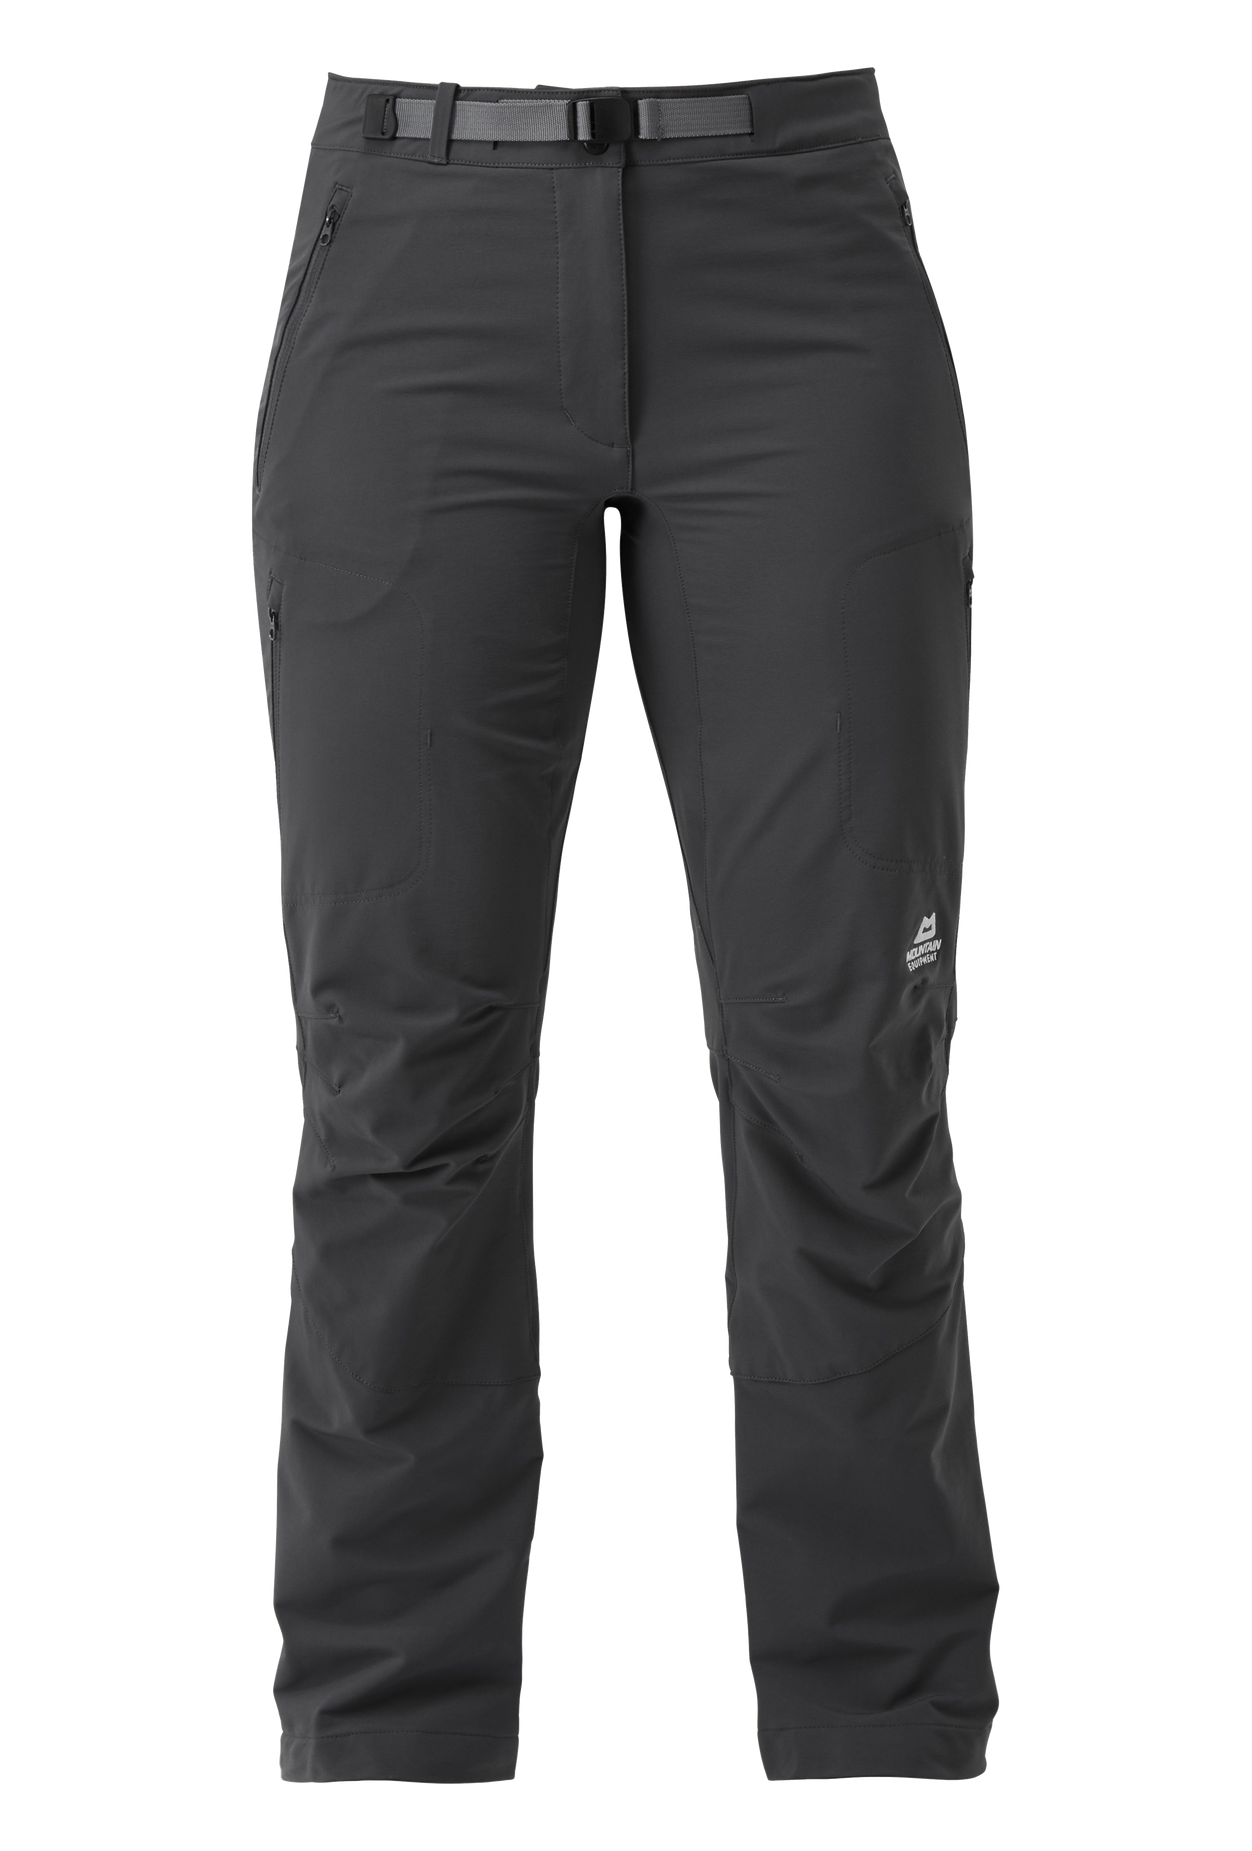 Mountain Equipment dámské softshellové kalhoty Chamois Wmns Pant - zkrácené Barva: Anvil Grey, Velikost: 10/S